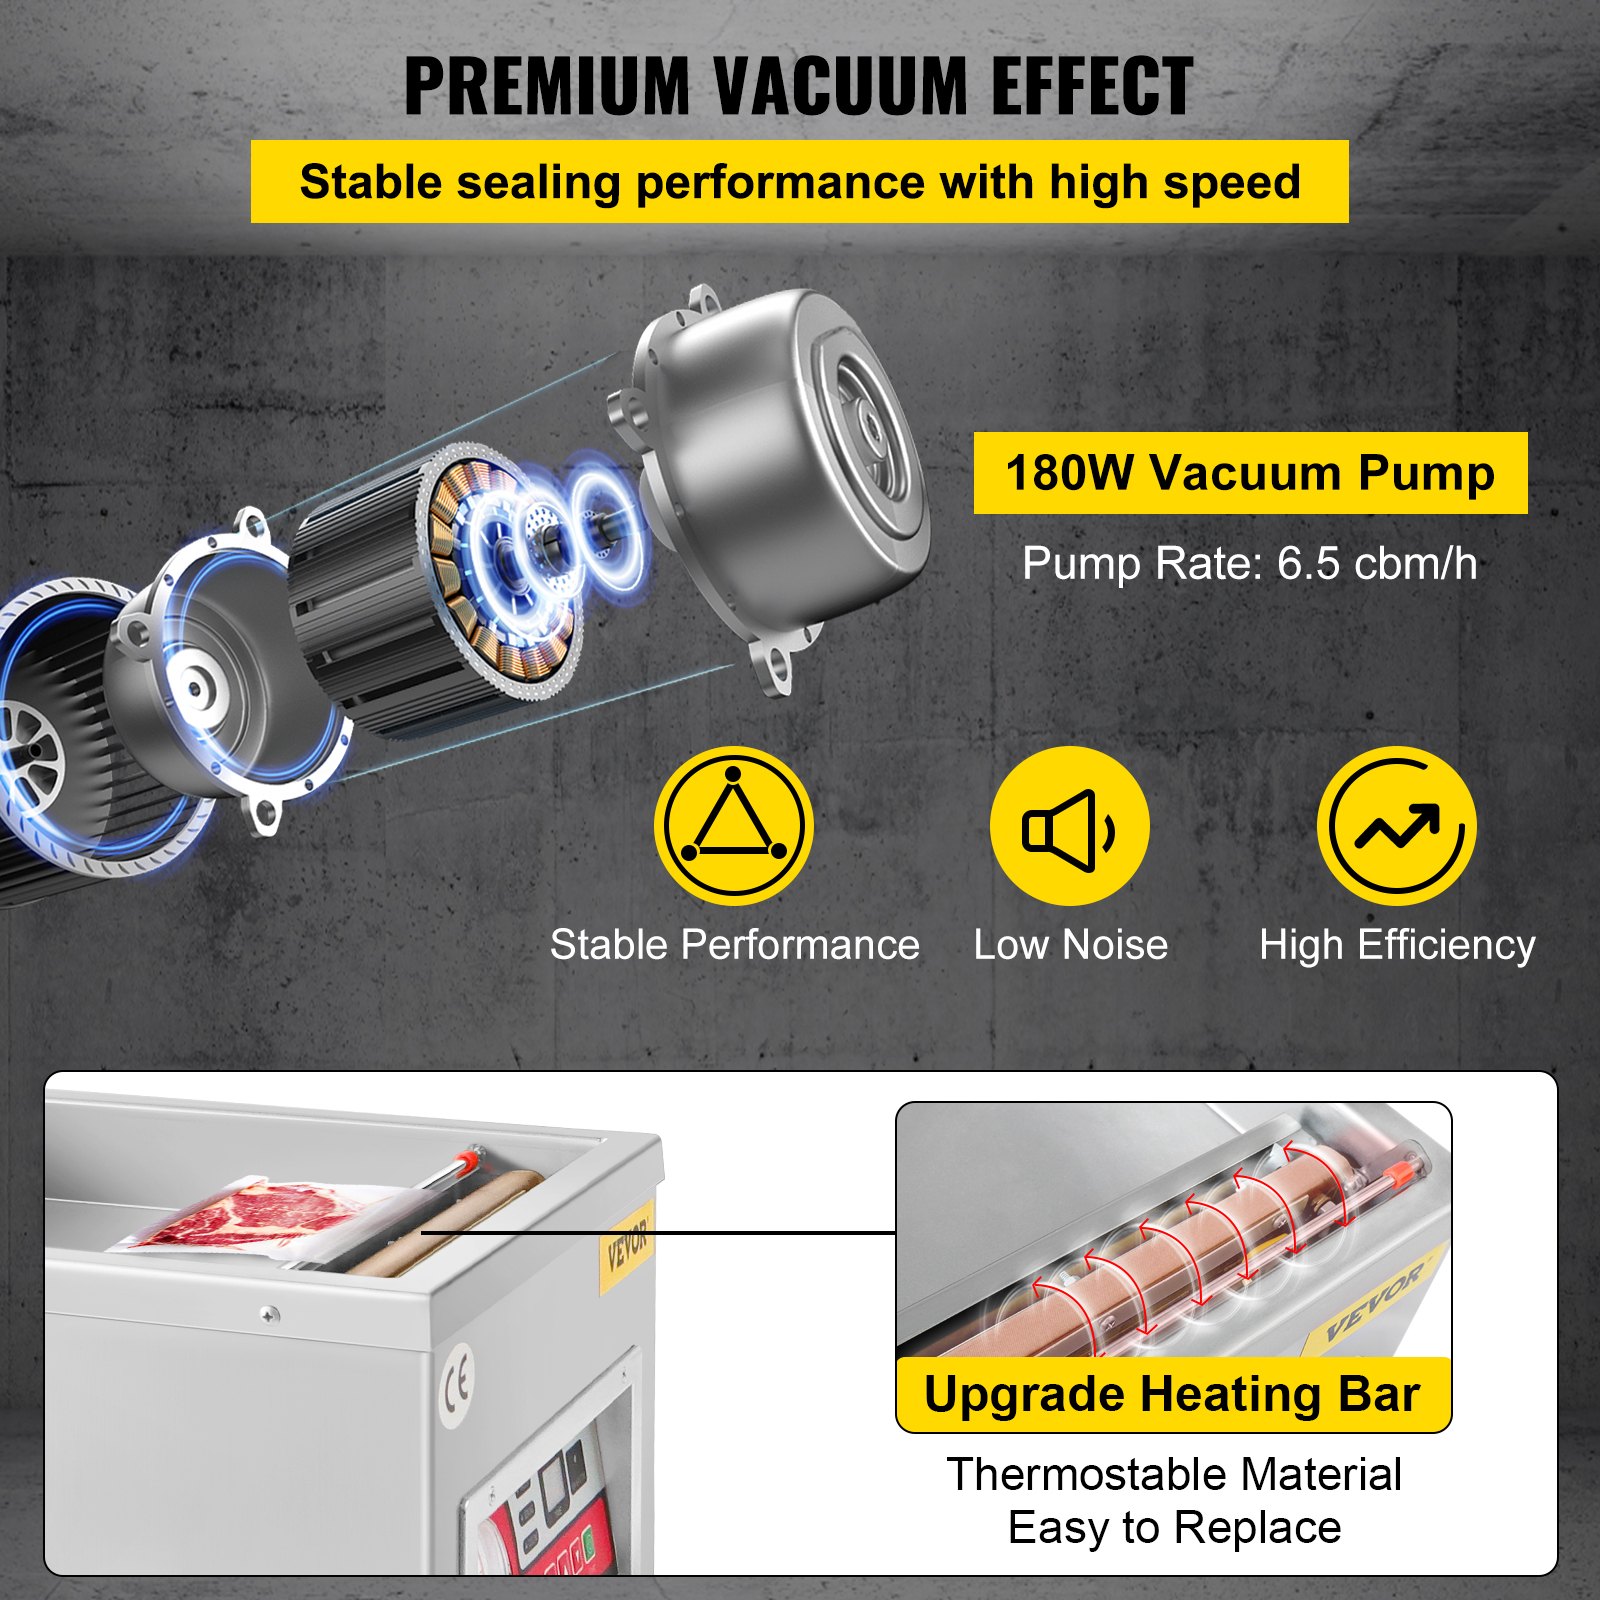 VEVOR Chamber Vacuum Sealer Vacuum Packaging Machine 6.5 cbm/h Pump ...